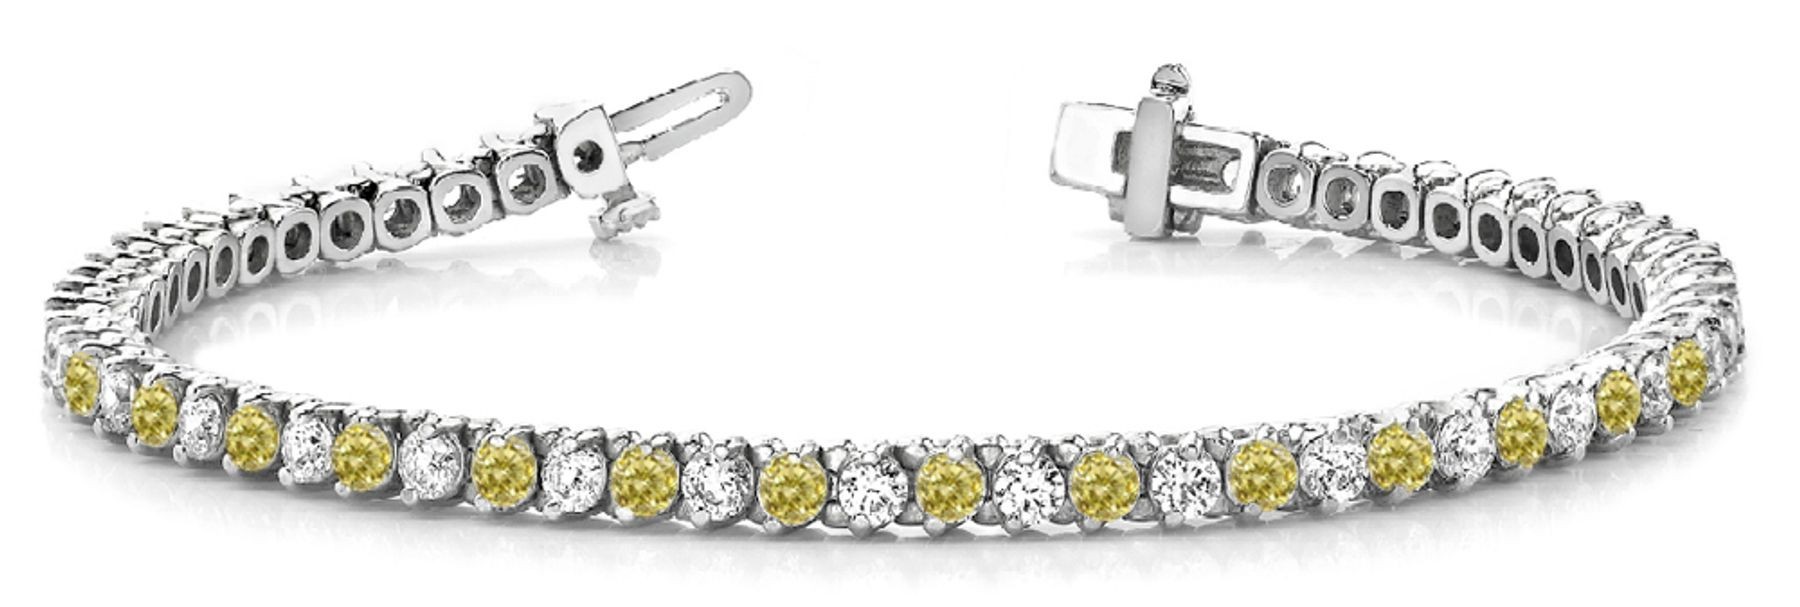 Colored Diamond Bracelets: Yellow Diamonds - Yellow Colored Diamond Bracelet